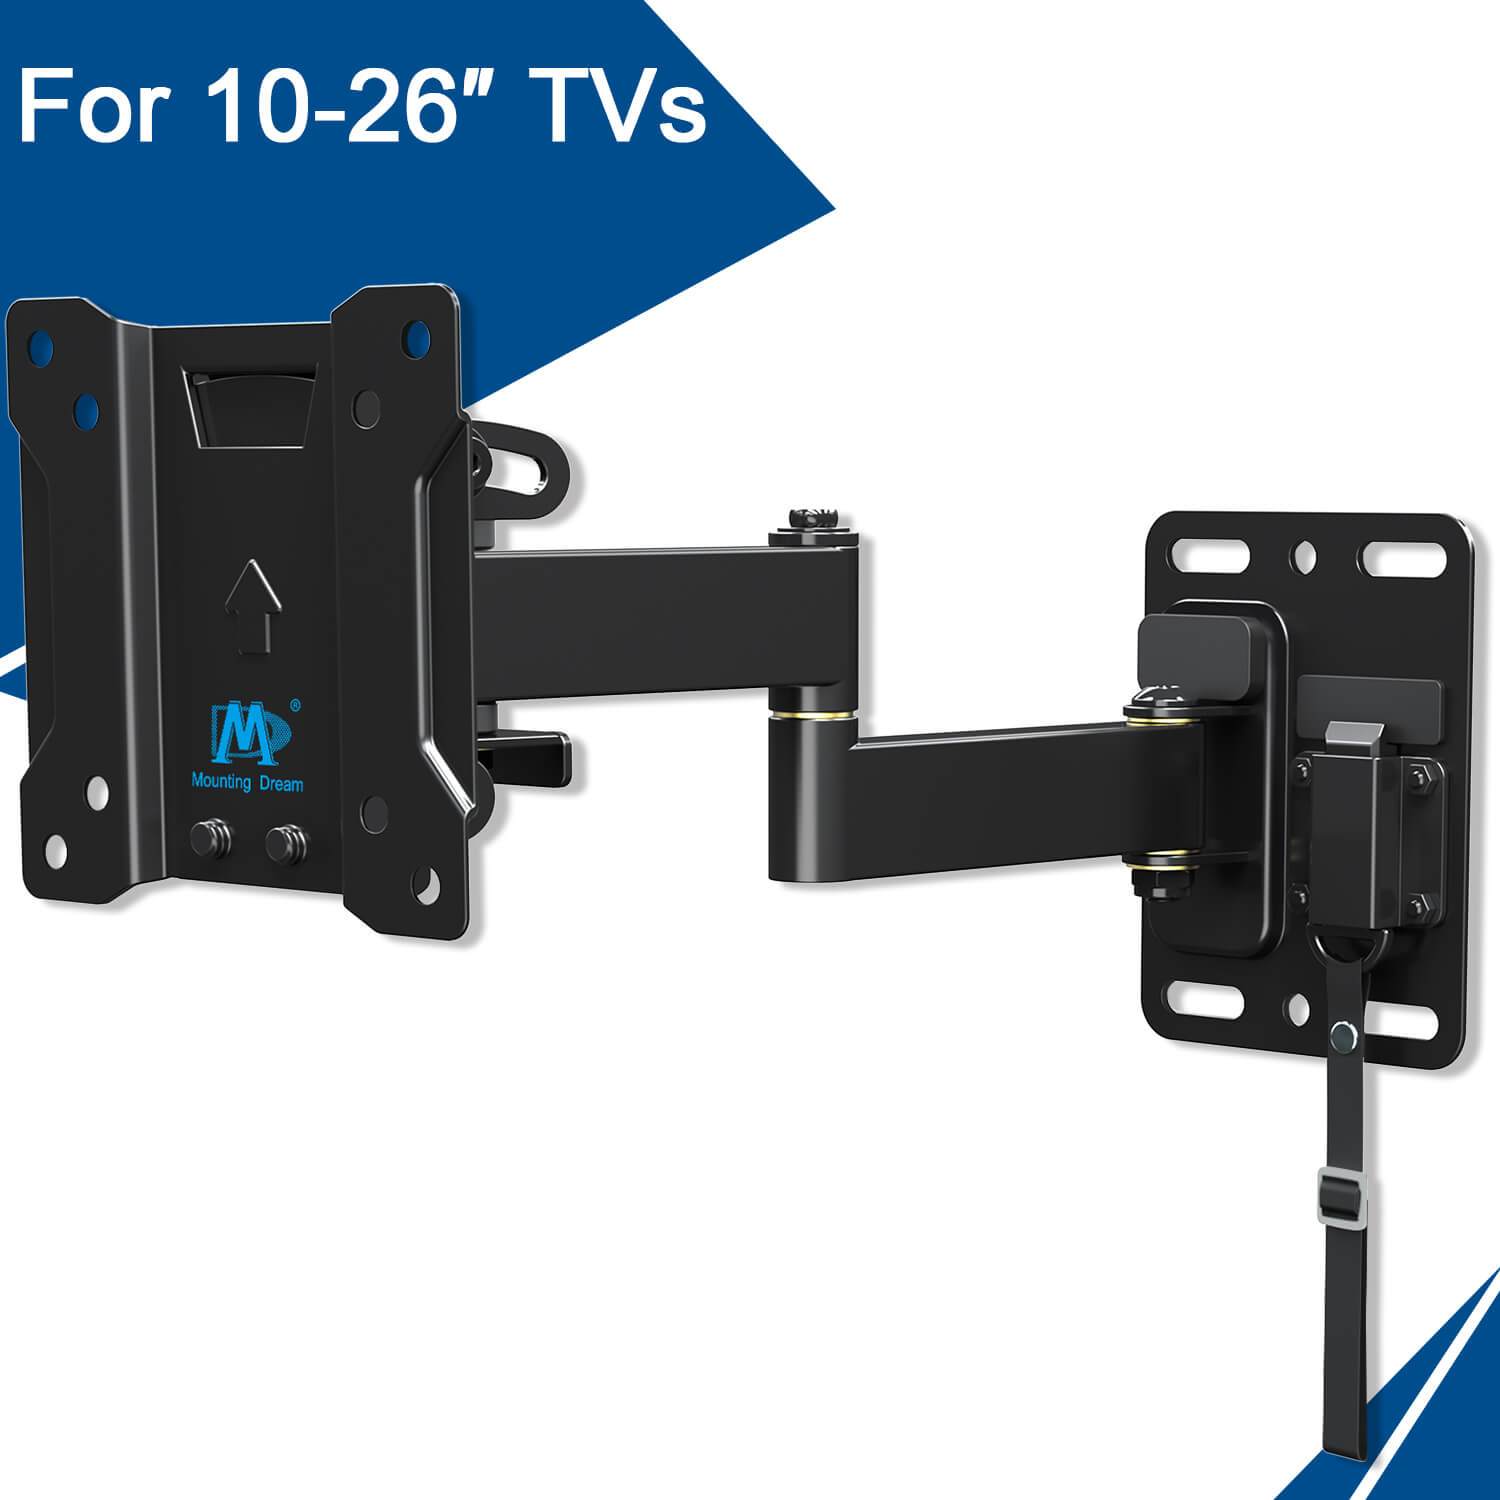 Lockable RV TV Mount for 10-26" Flat Screen TVs, LED/LCD on Camper Motor/trailer/RV TV Full Motion MD2209